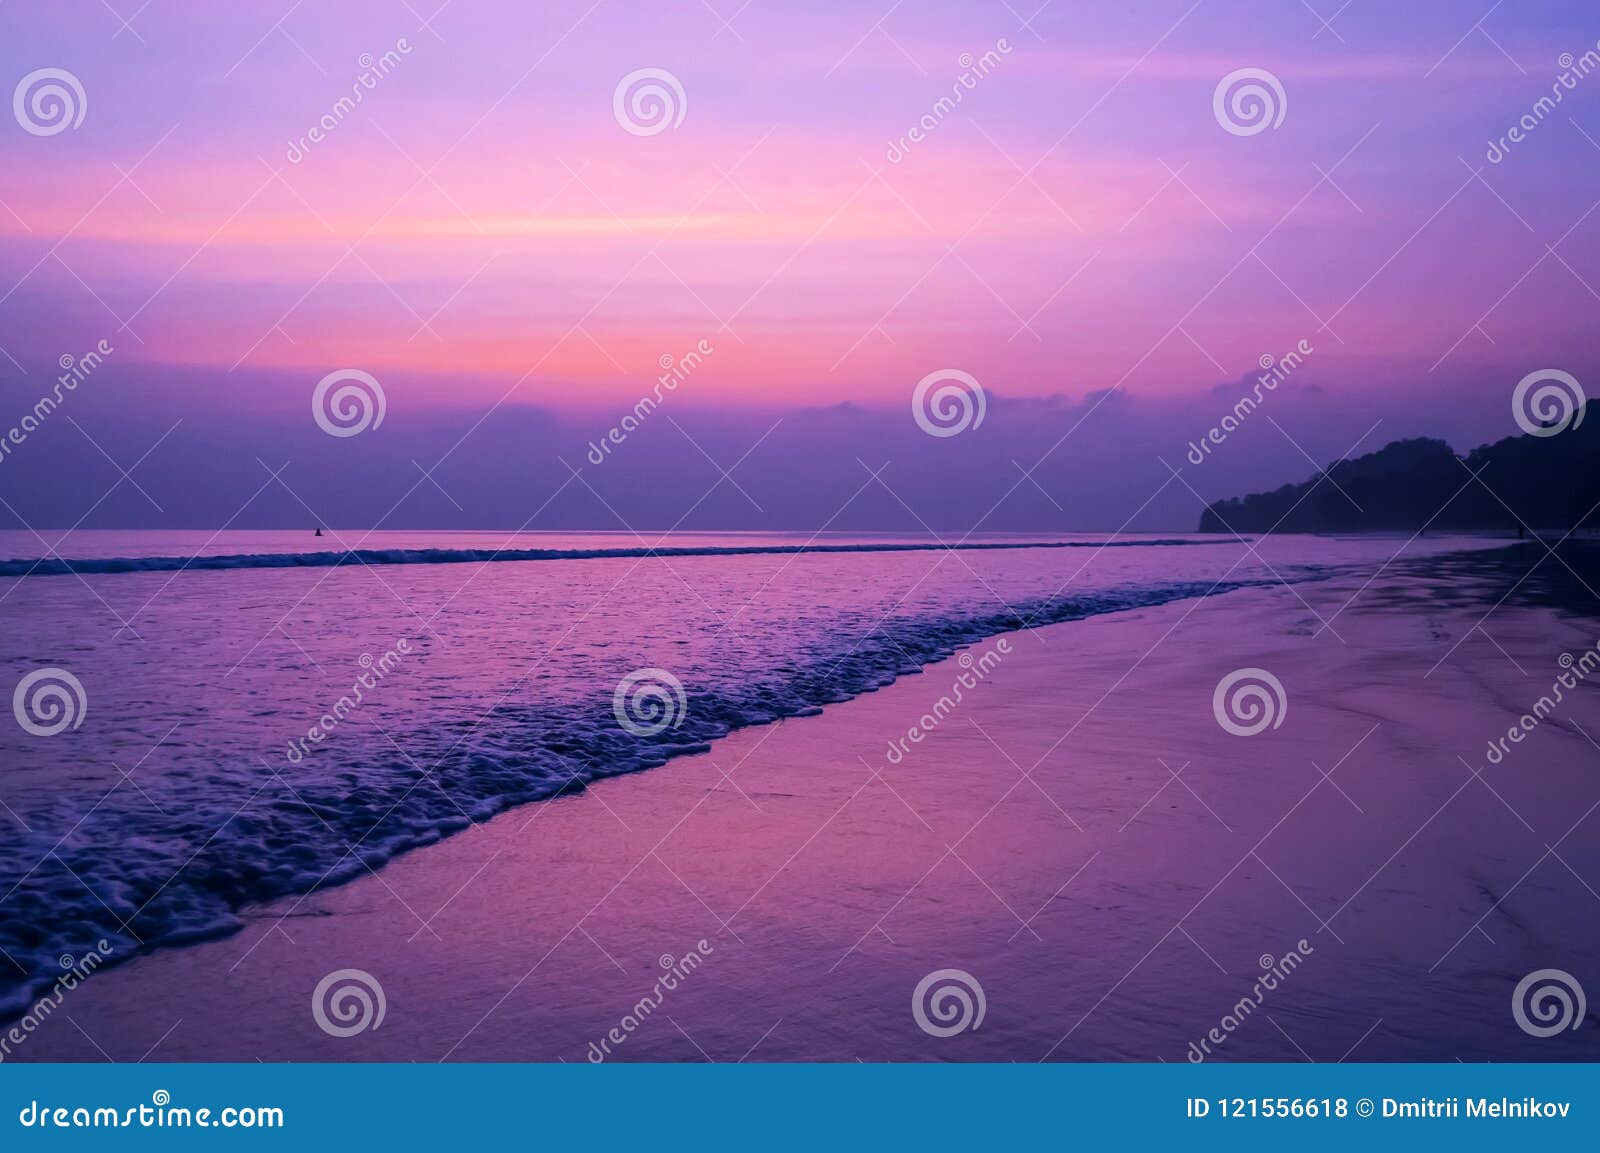 Beautiful Sunset Beach With Sweet Purple Orange Blue Sky Stock Photo Image Of Beautiful Evening